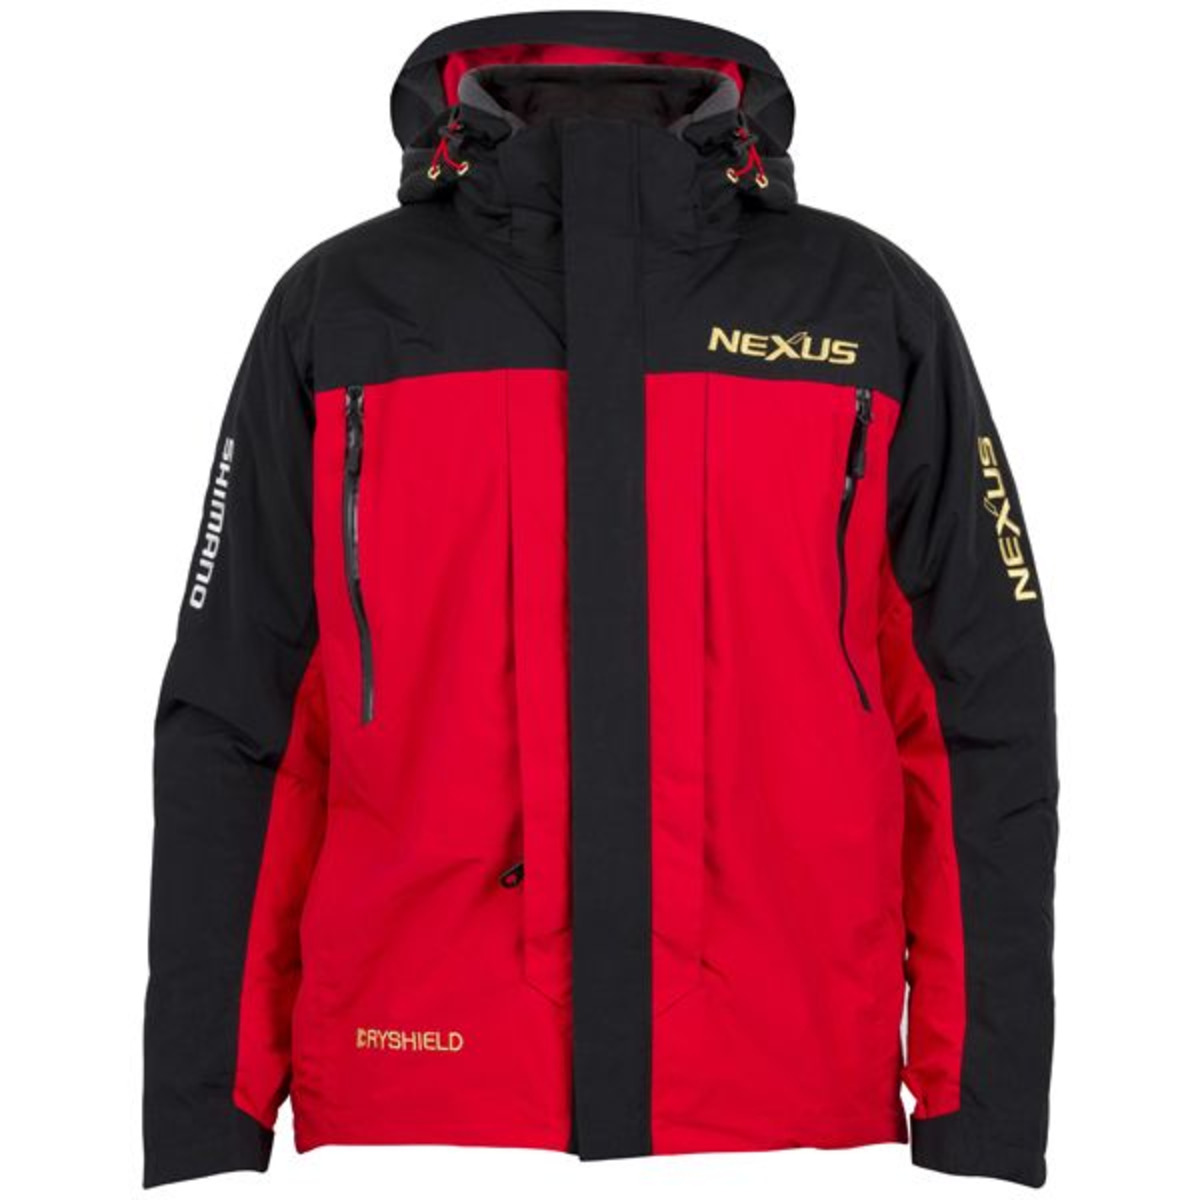 Shimano Nexus Dryshield Advance Cold Weather Jacket - Red - XL